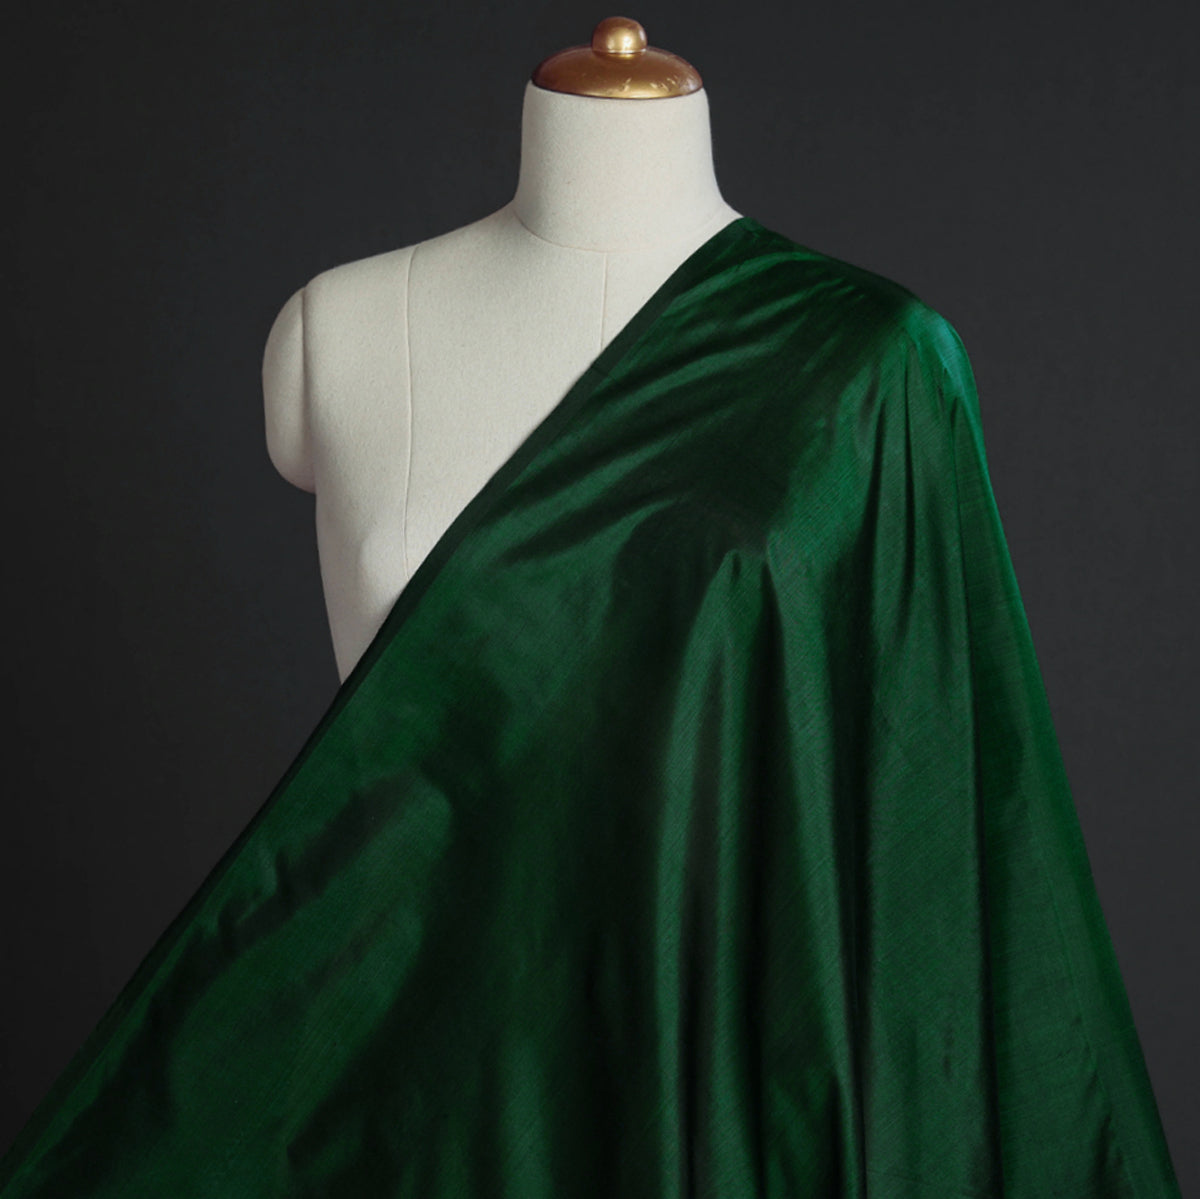 Indian dark green soft pure plain silk fabric